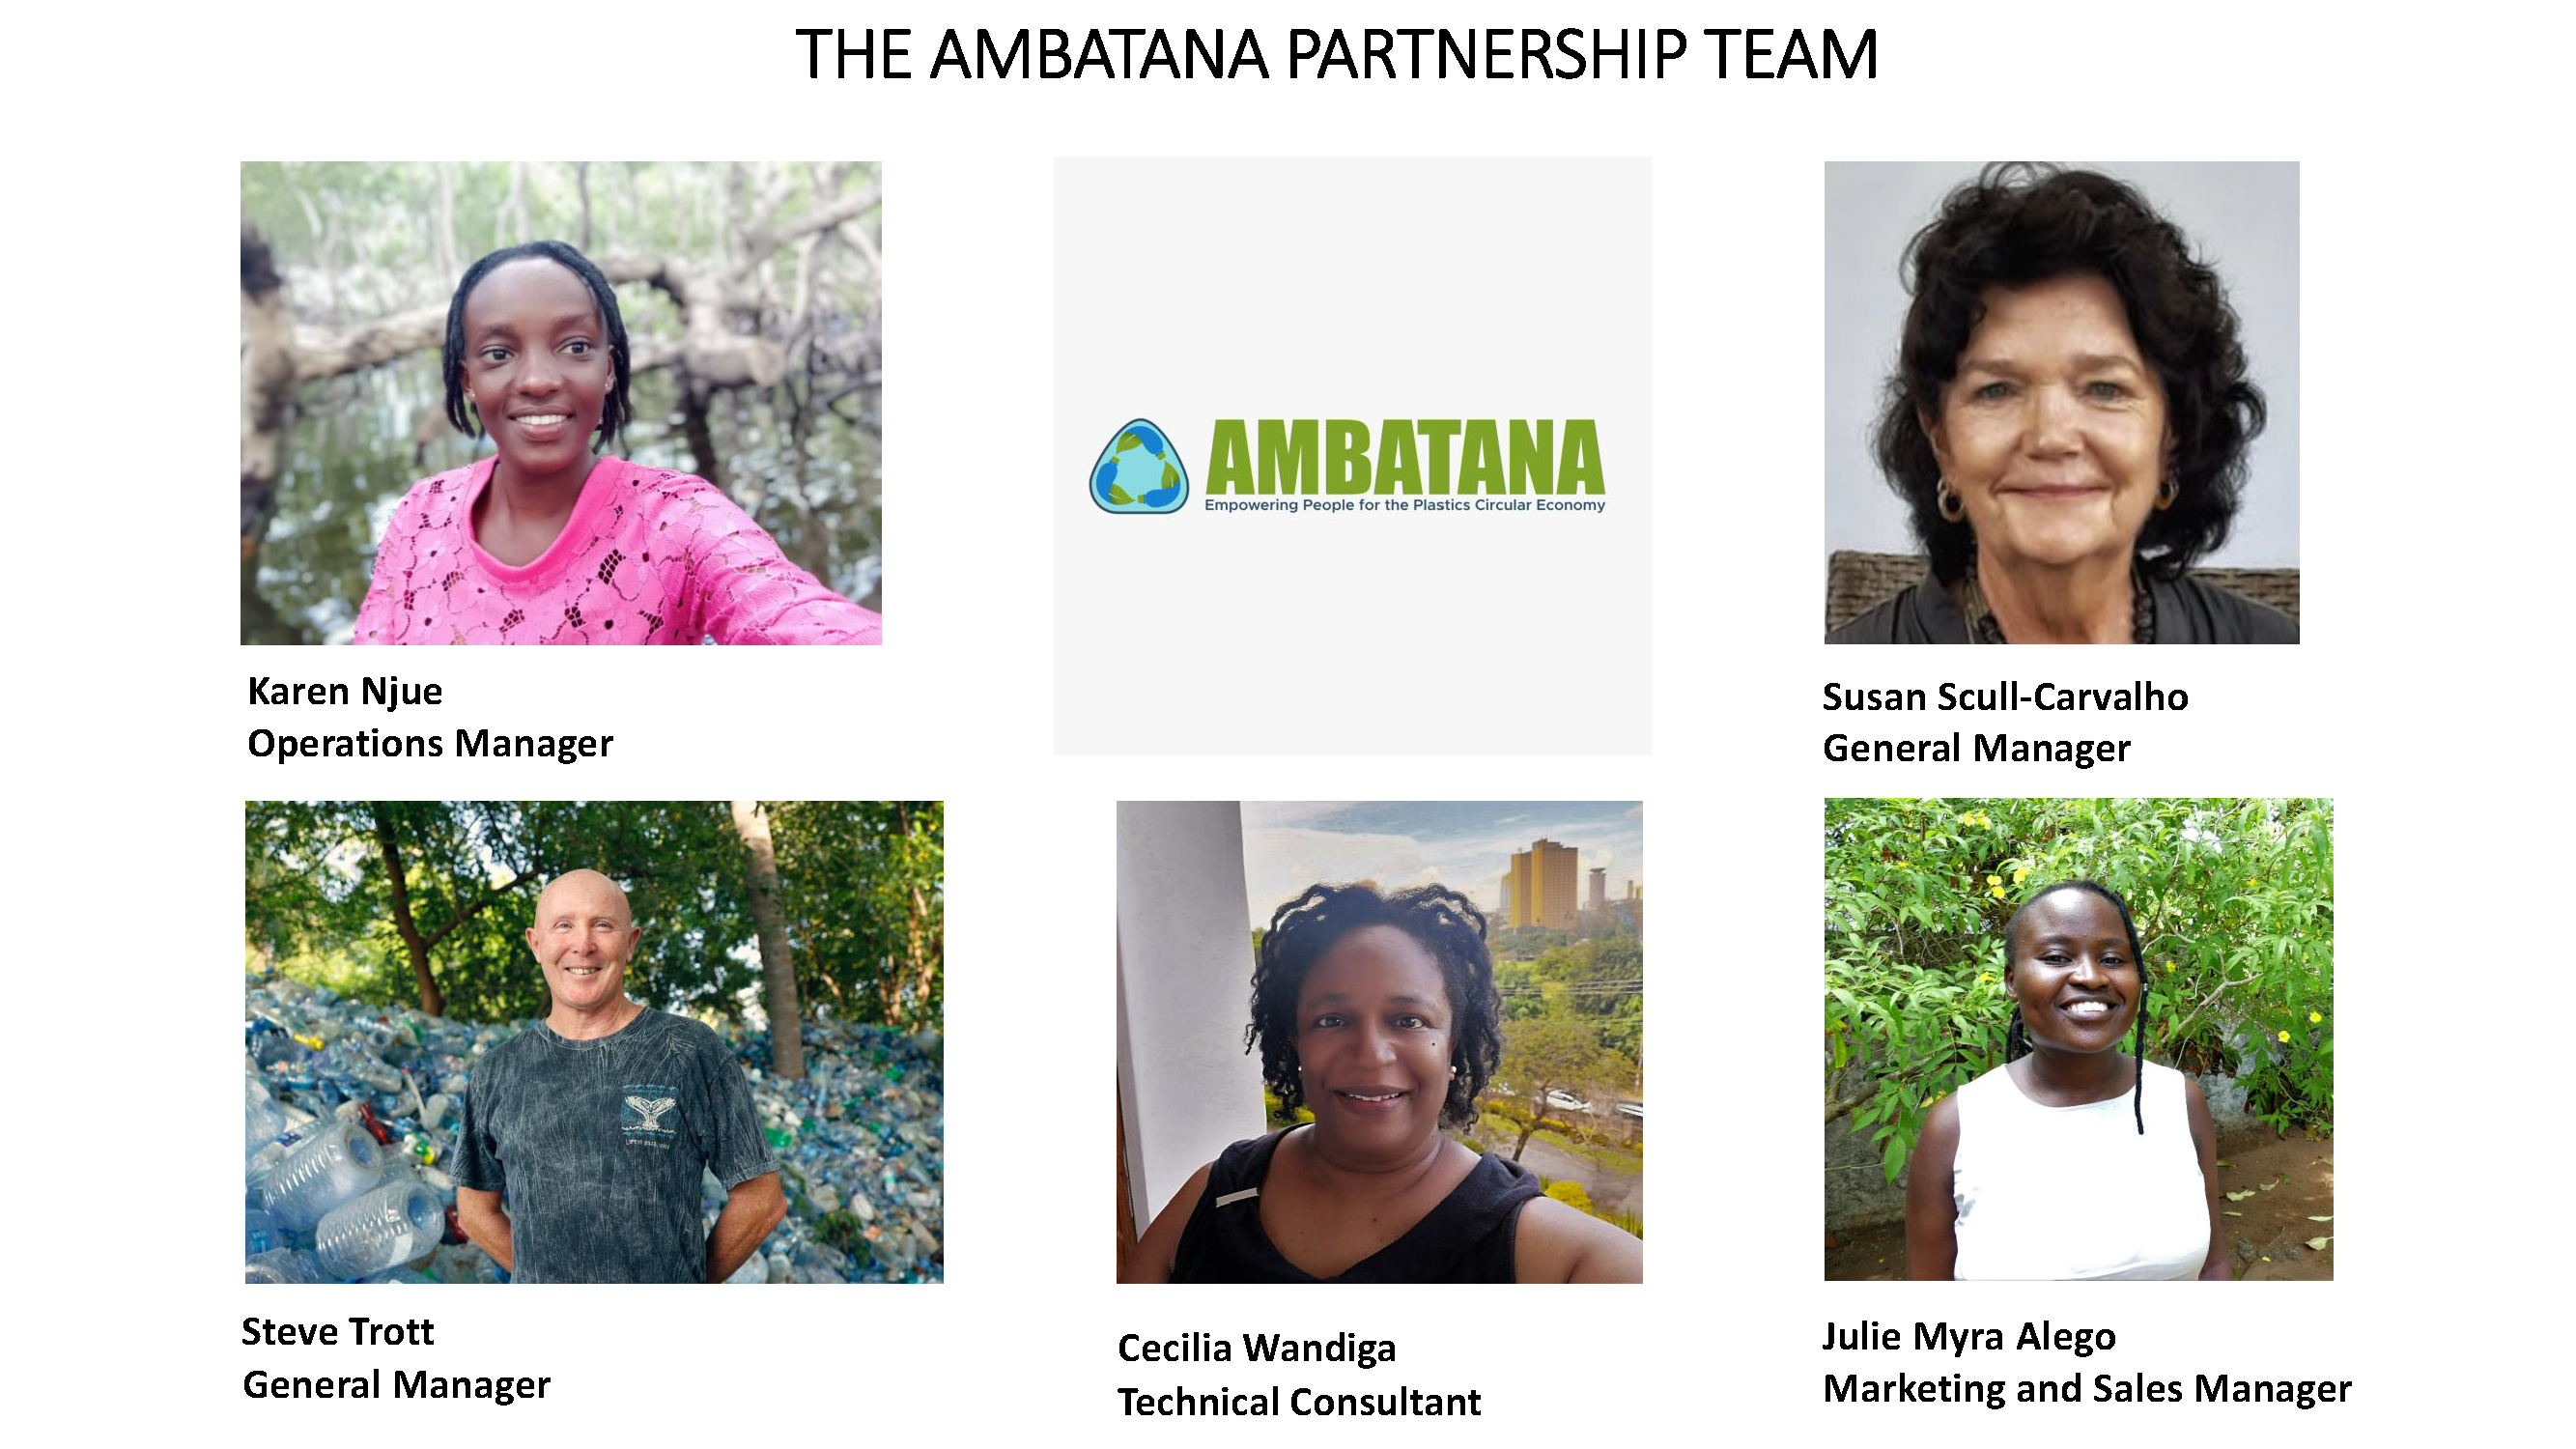 The Ambatana Partnership Team | L'équipe partenariat Ambatana